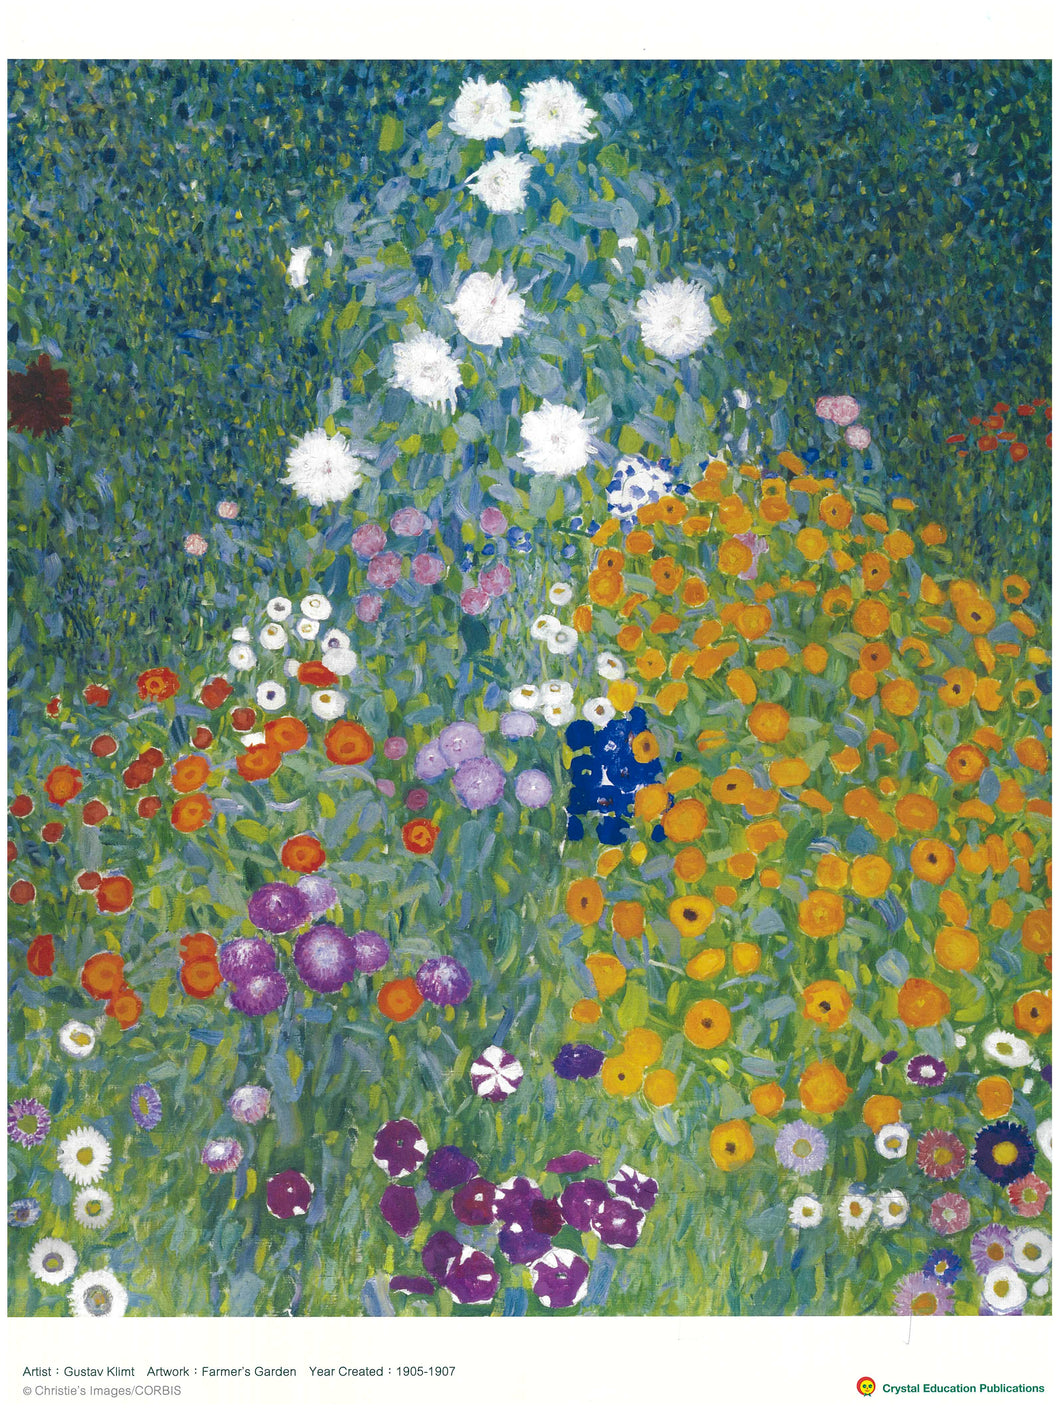 Farmer’s Garden (Gustav Klimt, 1905-1907)  農夫的花園